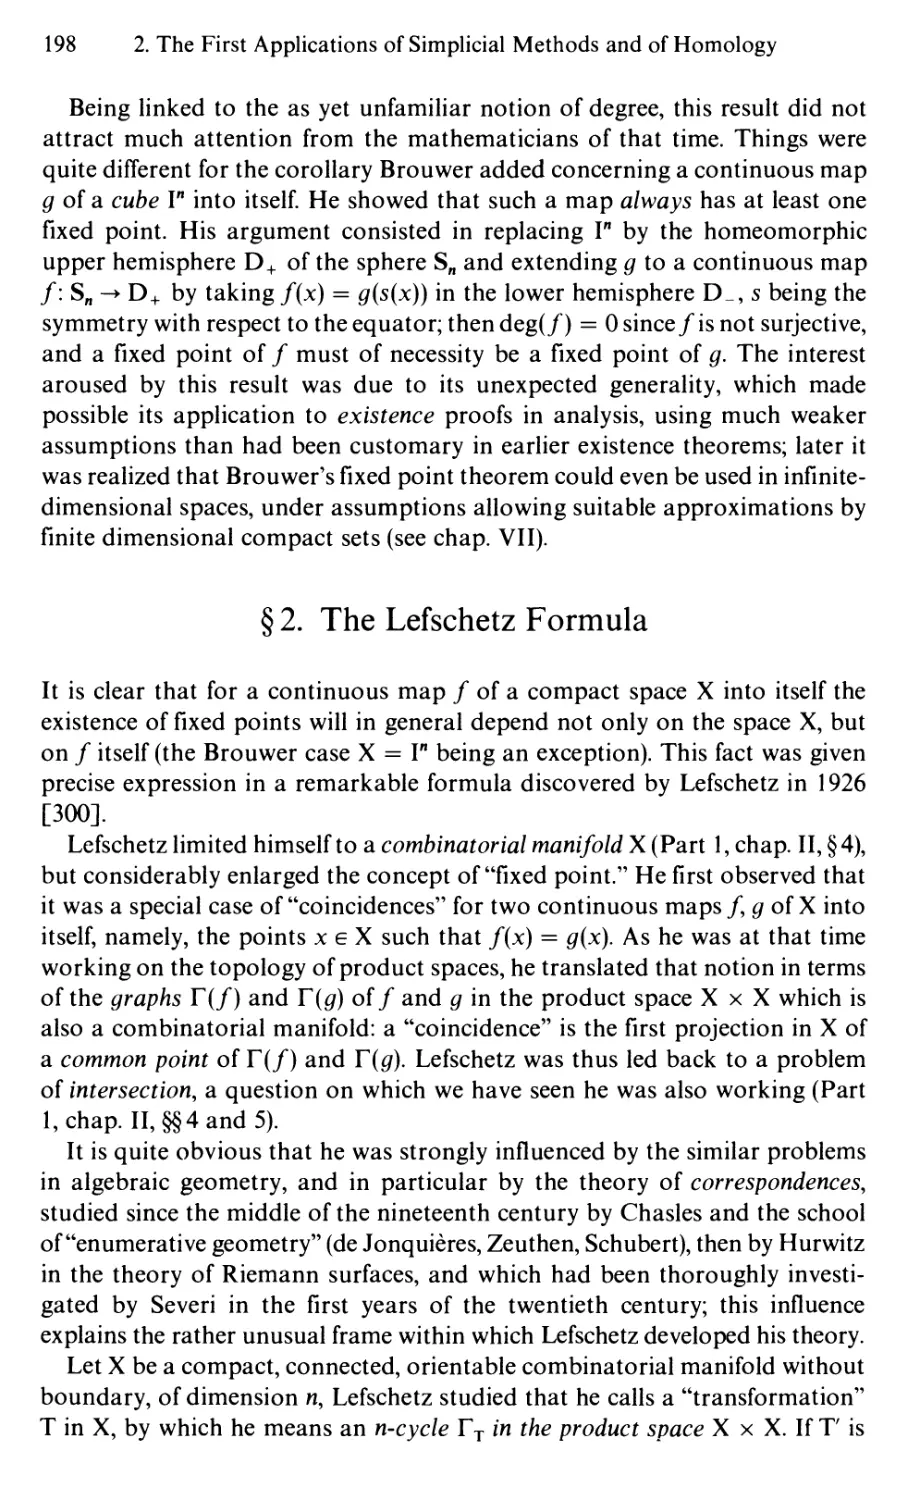 §2. The Lefschetz Formula